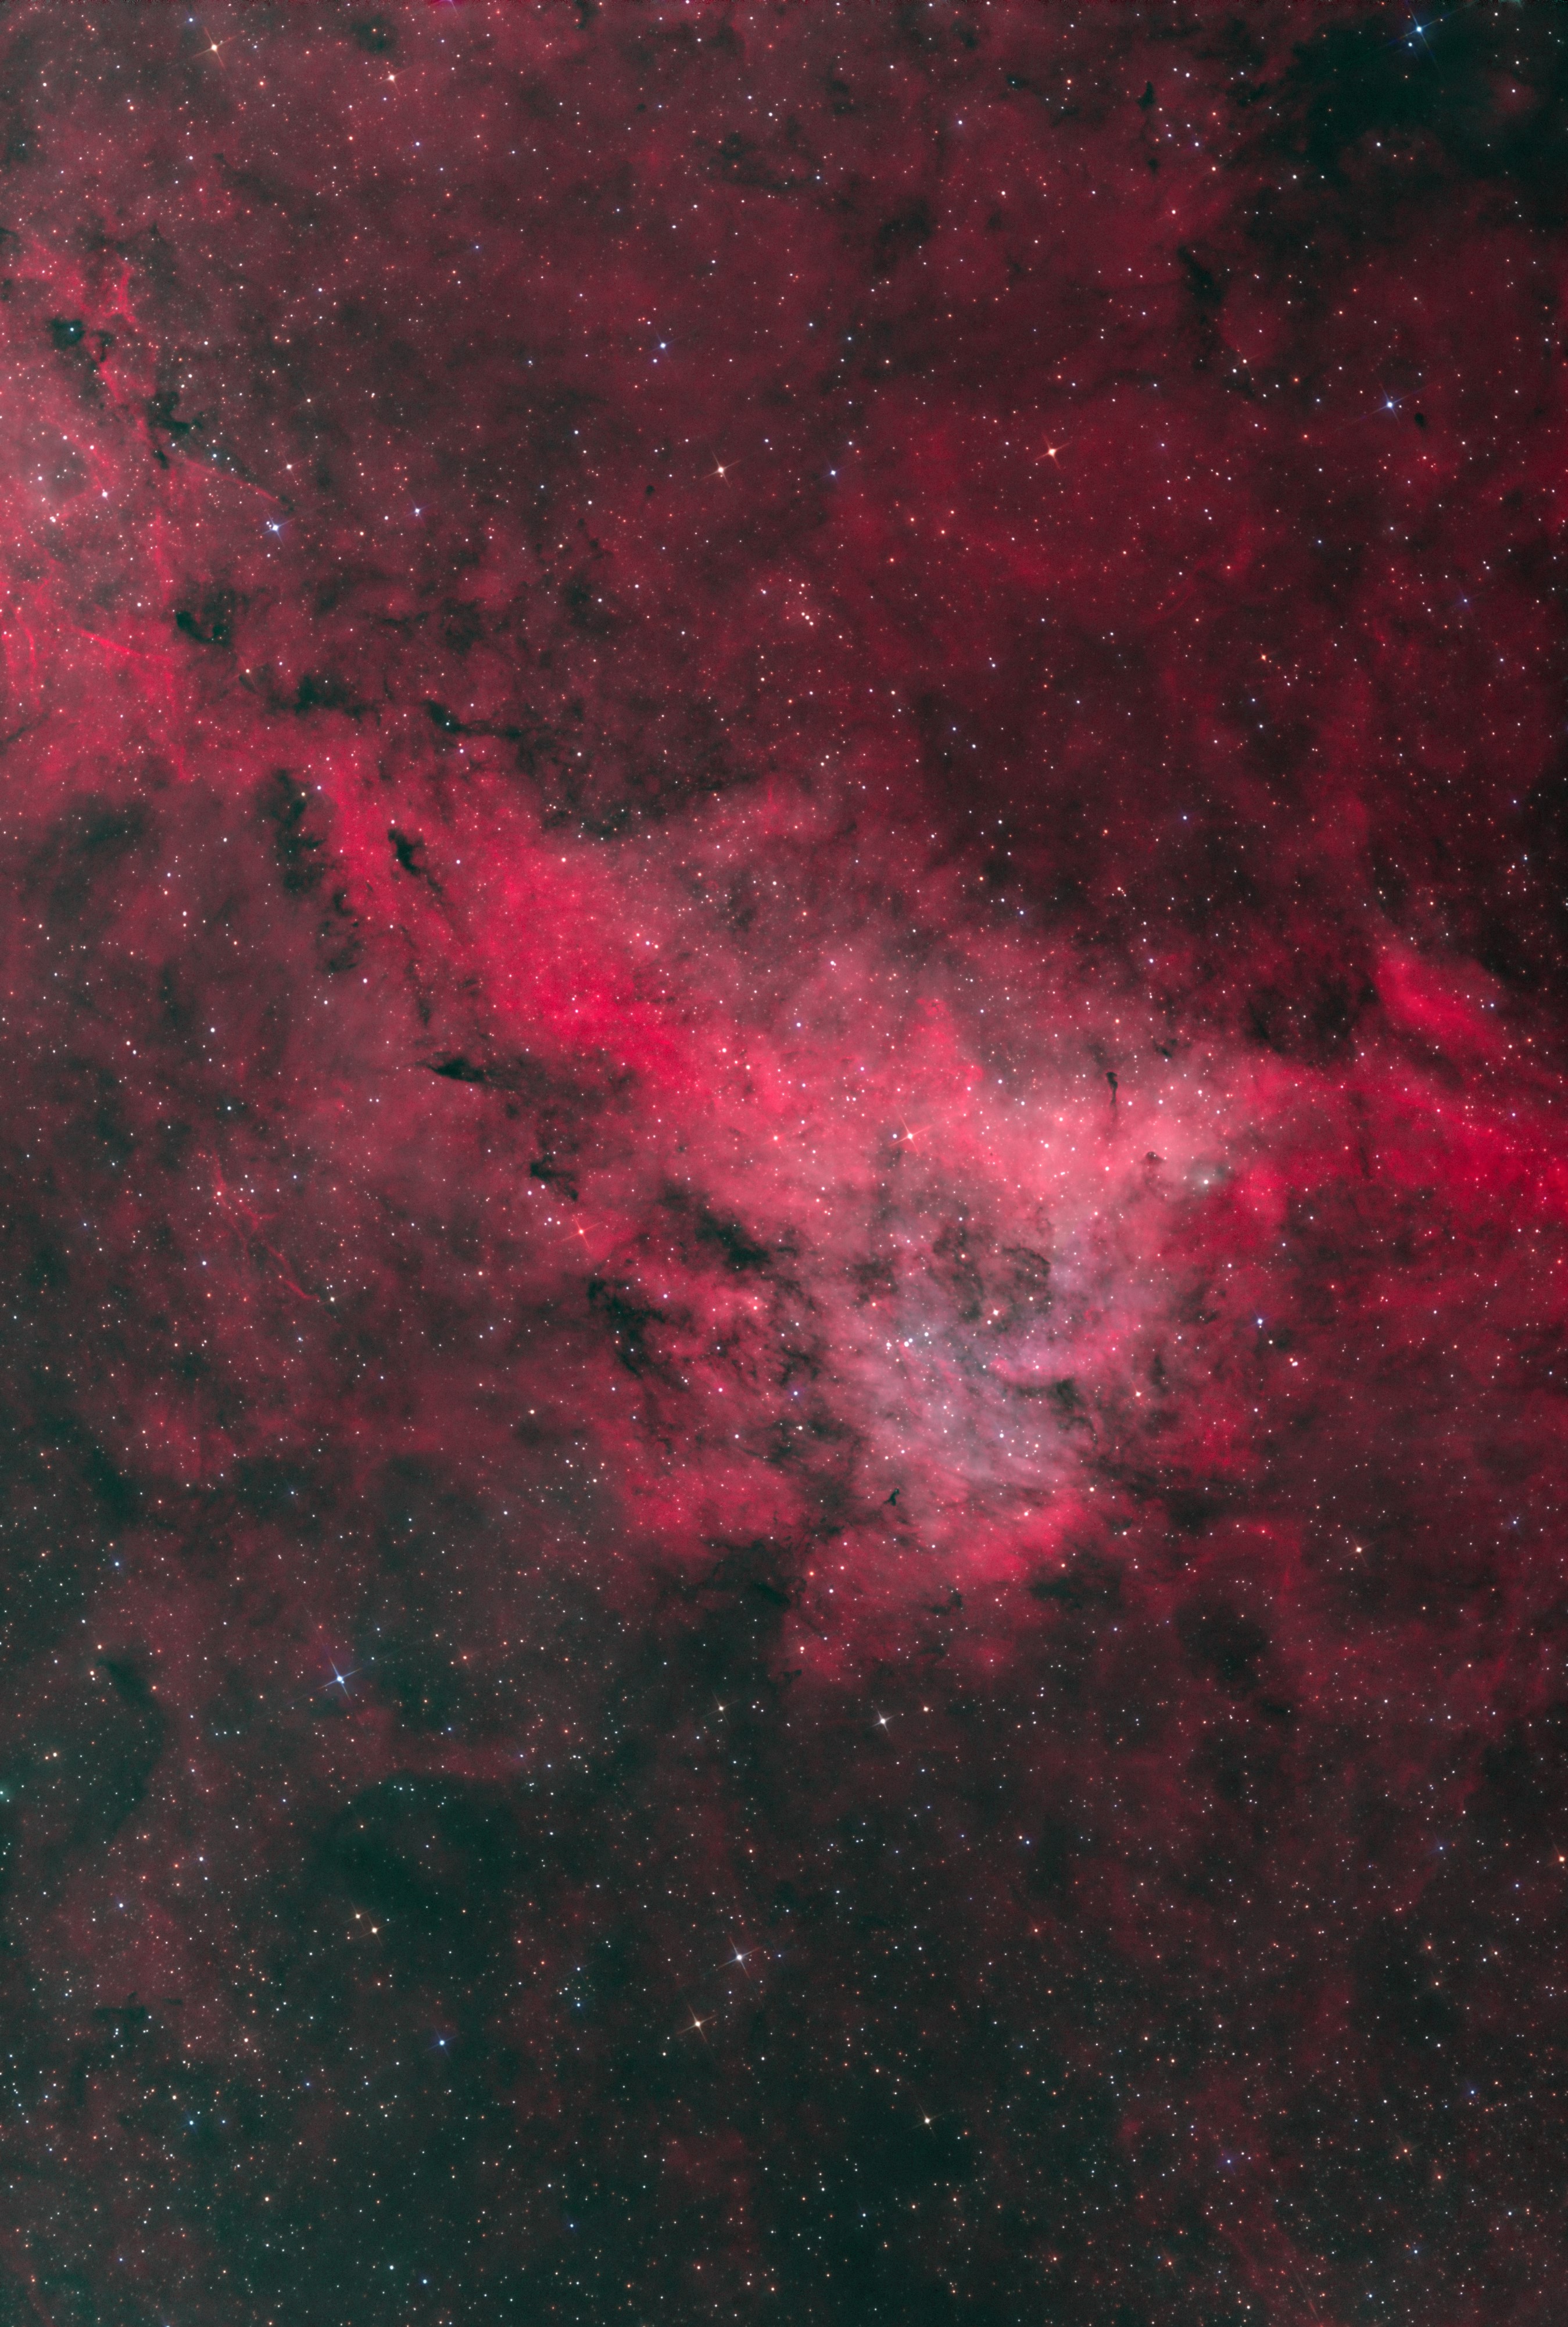 LBN 251_Longhorn nebula_Bicolor_RGB stars_2_sm.jpg